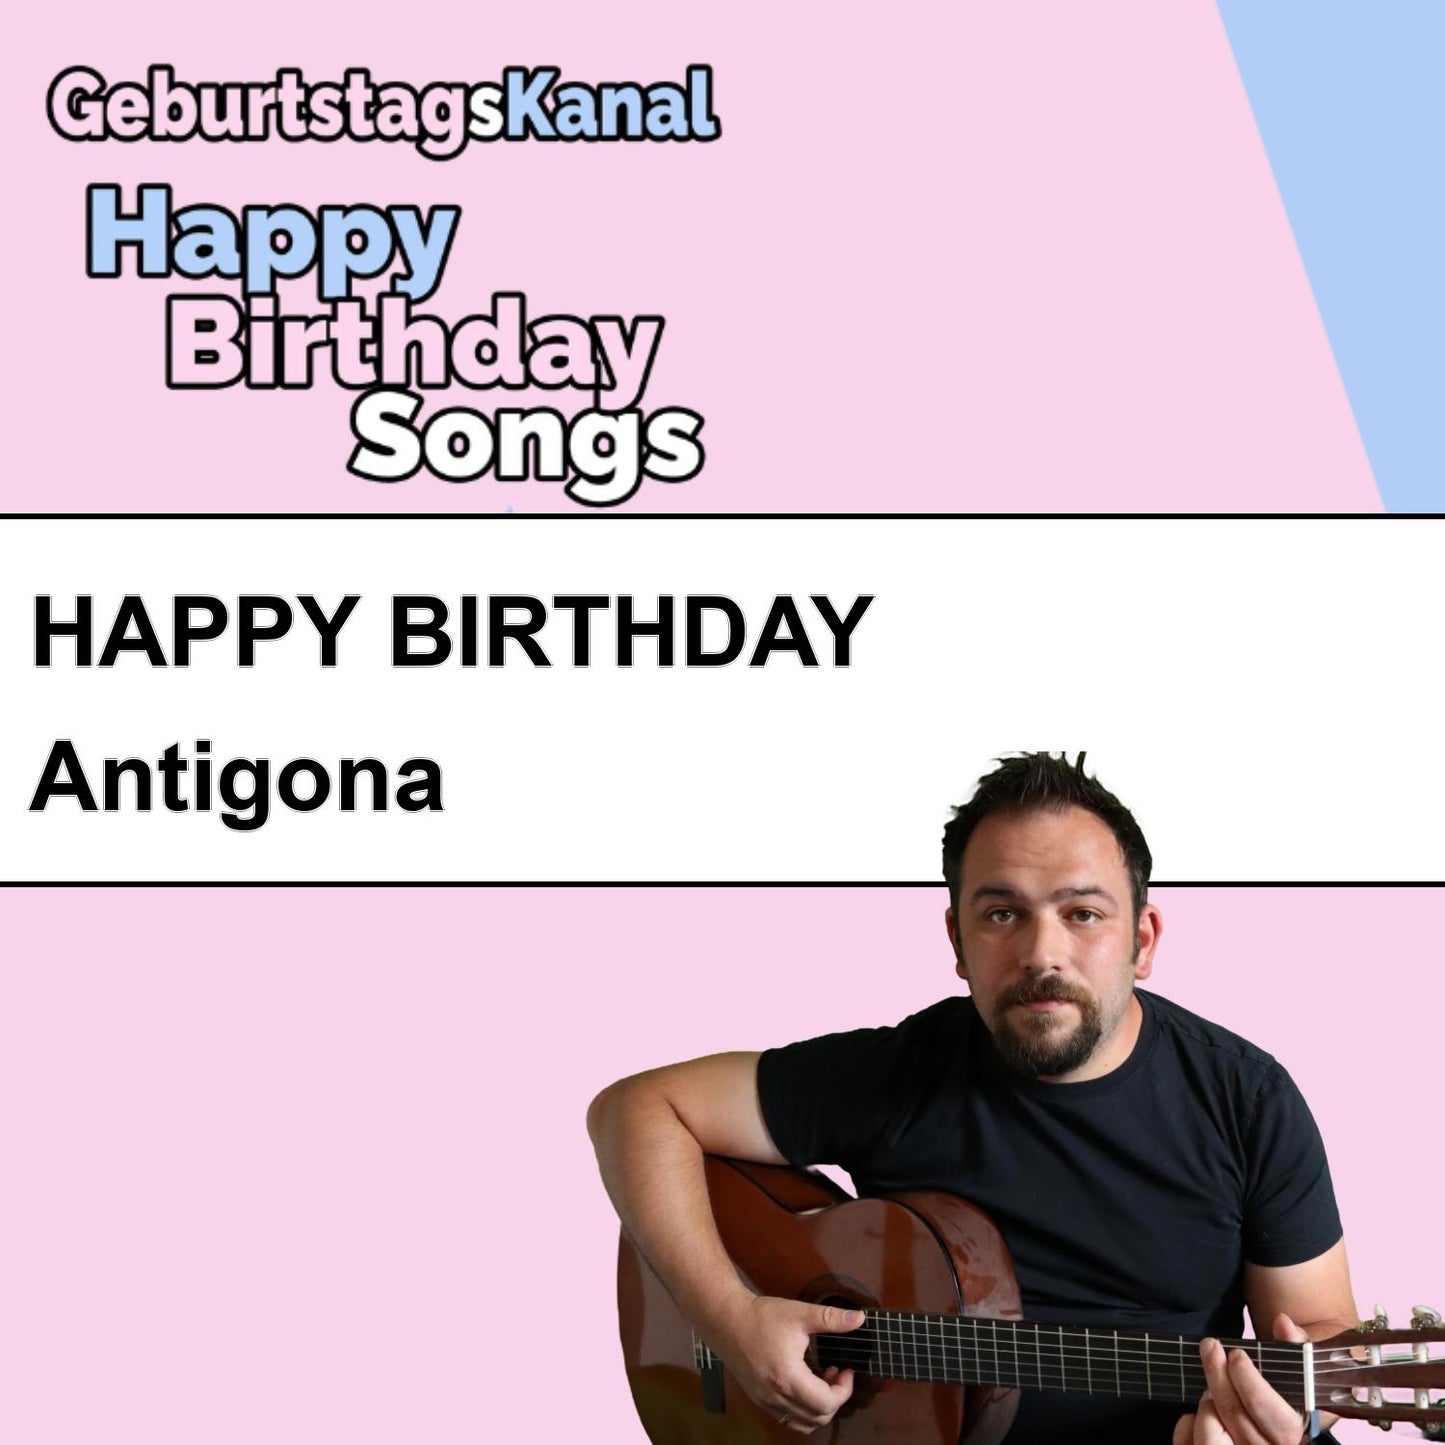 Produktbild Happy Birthday to you Antigona mit Wunschgrußbotschaft